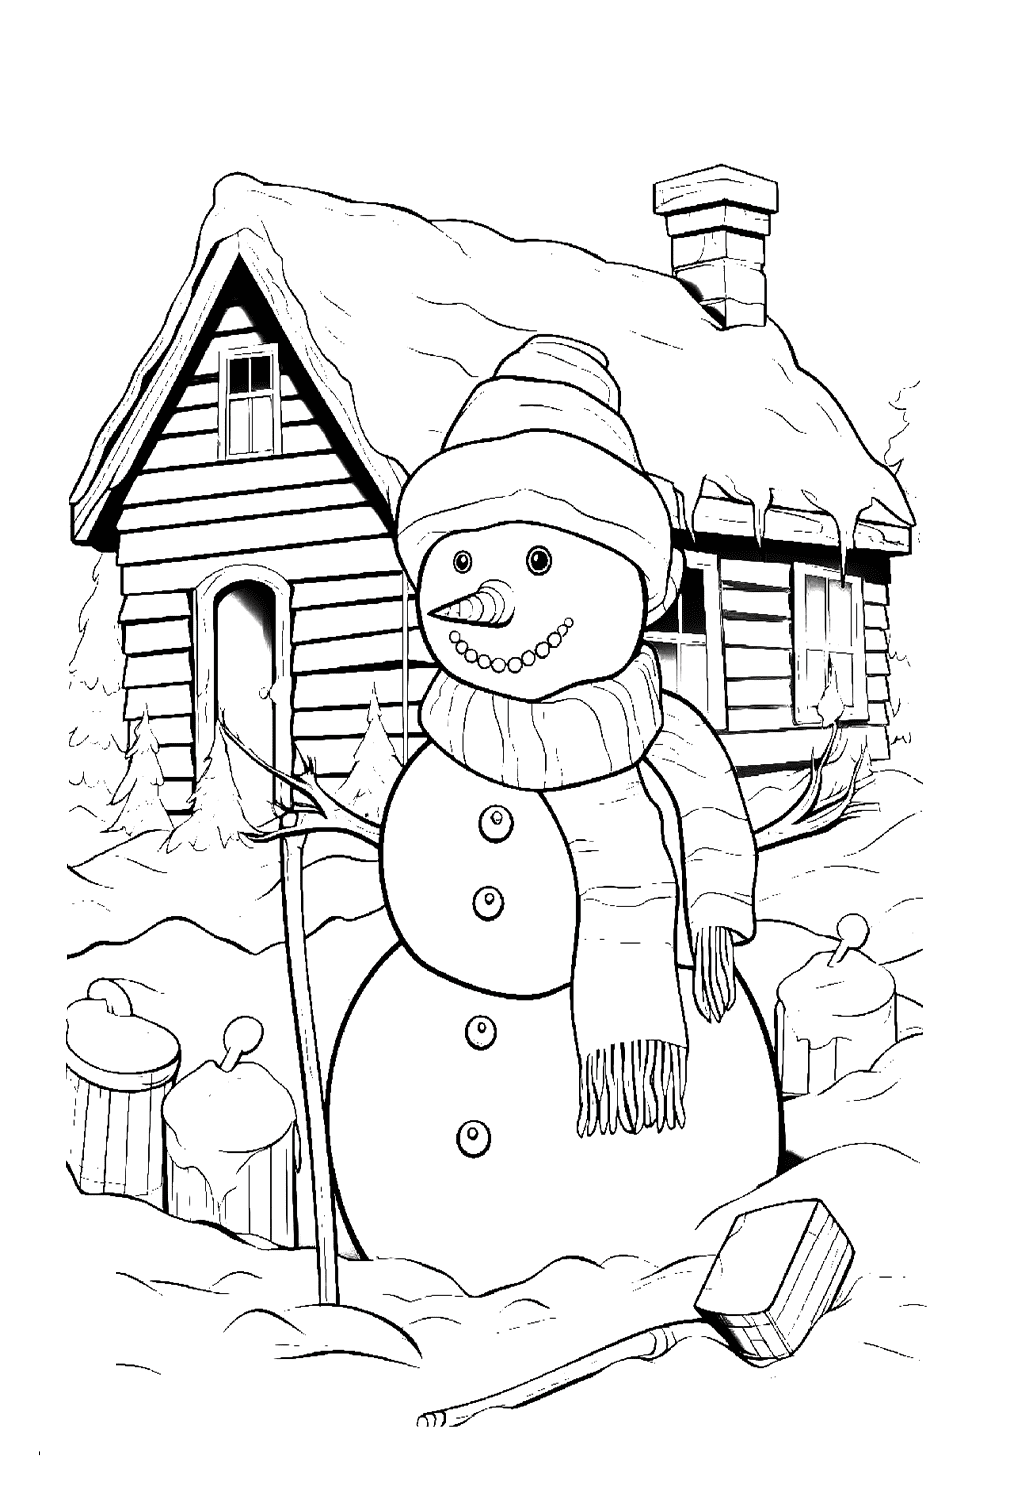 Snowman Coloring Sheet Printable